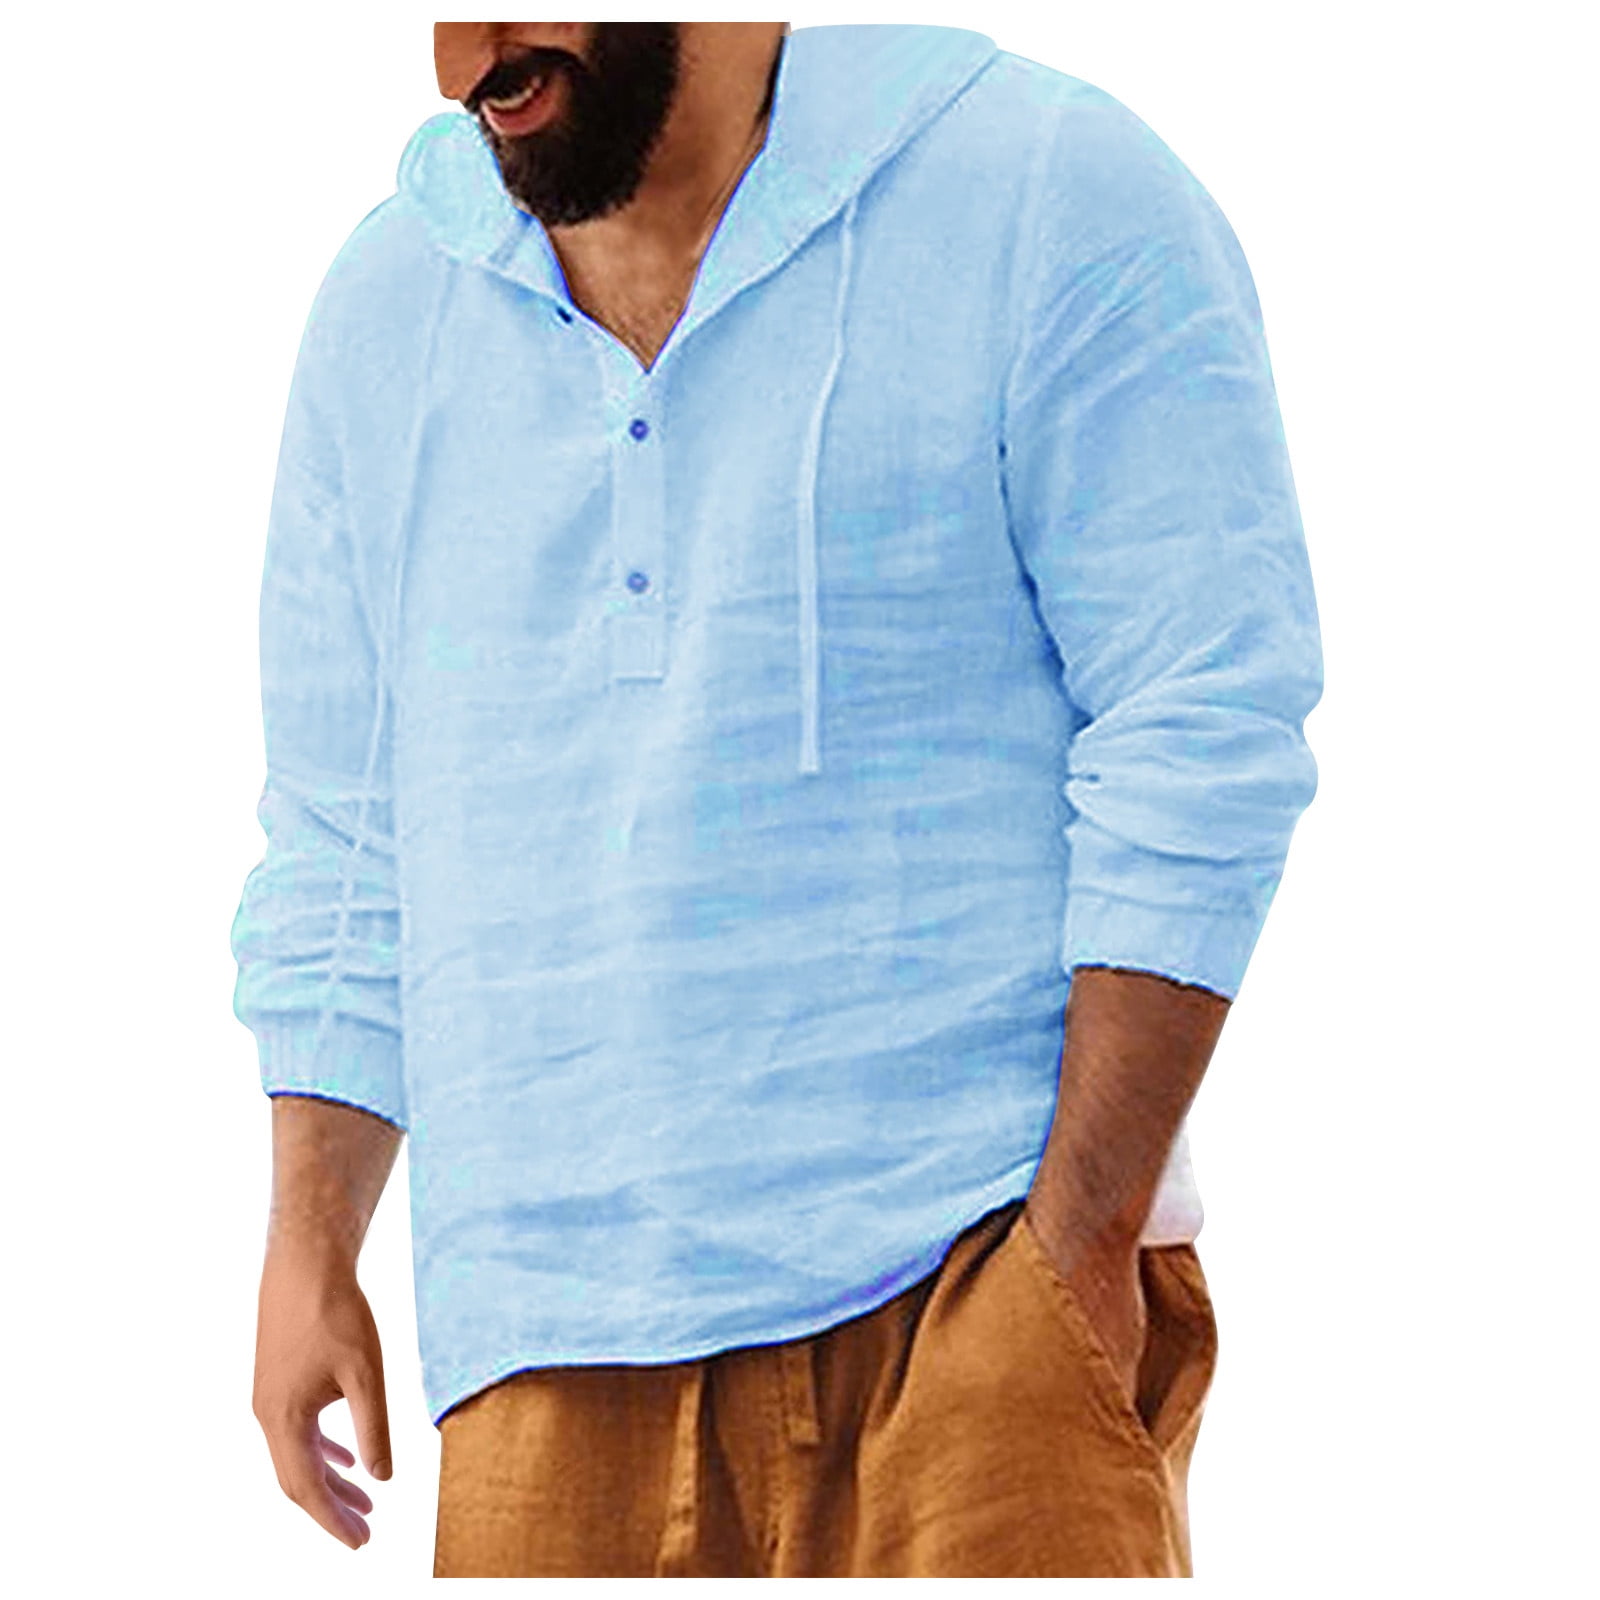 Xysaqa Men's Fashion Pullover Hoodies Henleys Shirts Casual Cotton ...